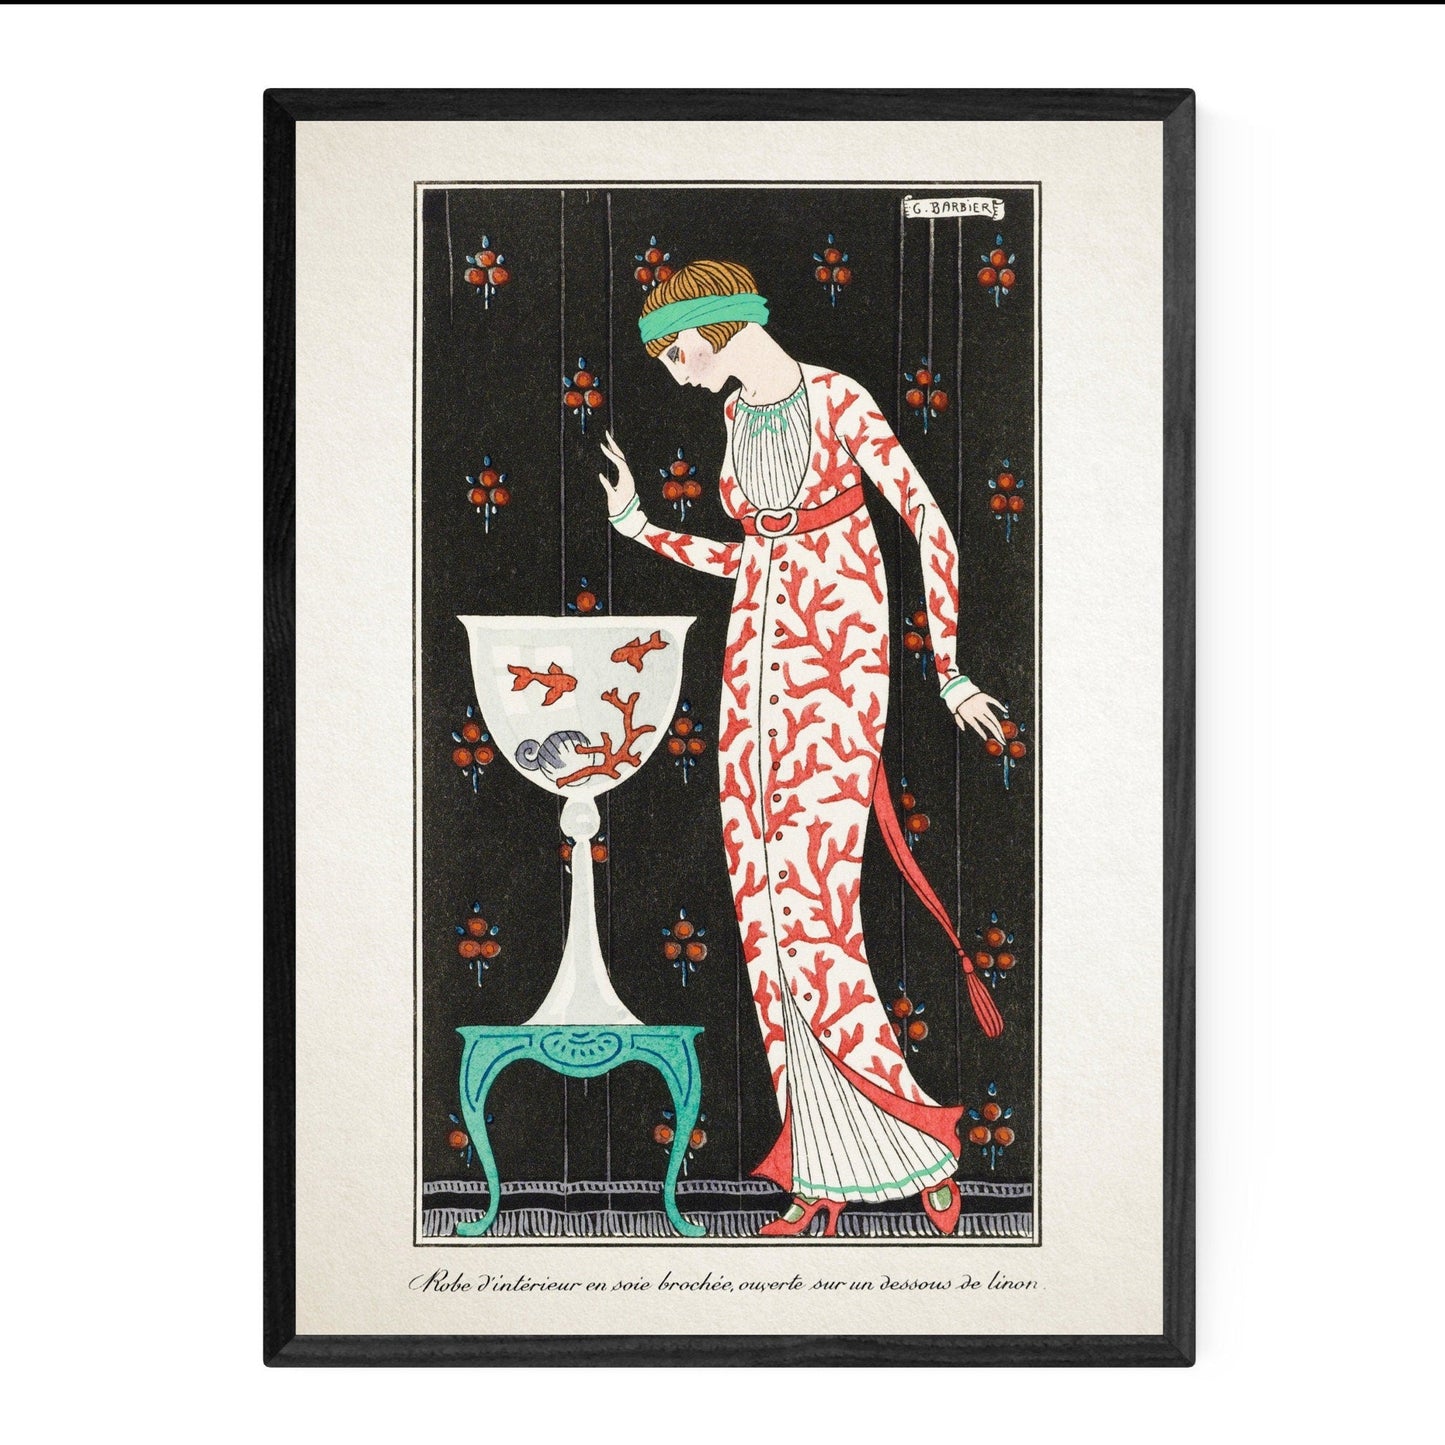 Set of Three Art Deco Prints | Vintage French Wall Art | 1930s Style Fashion | 3 Nouveau Poster Prints | Gallery Wall Prints